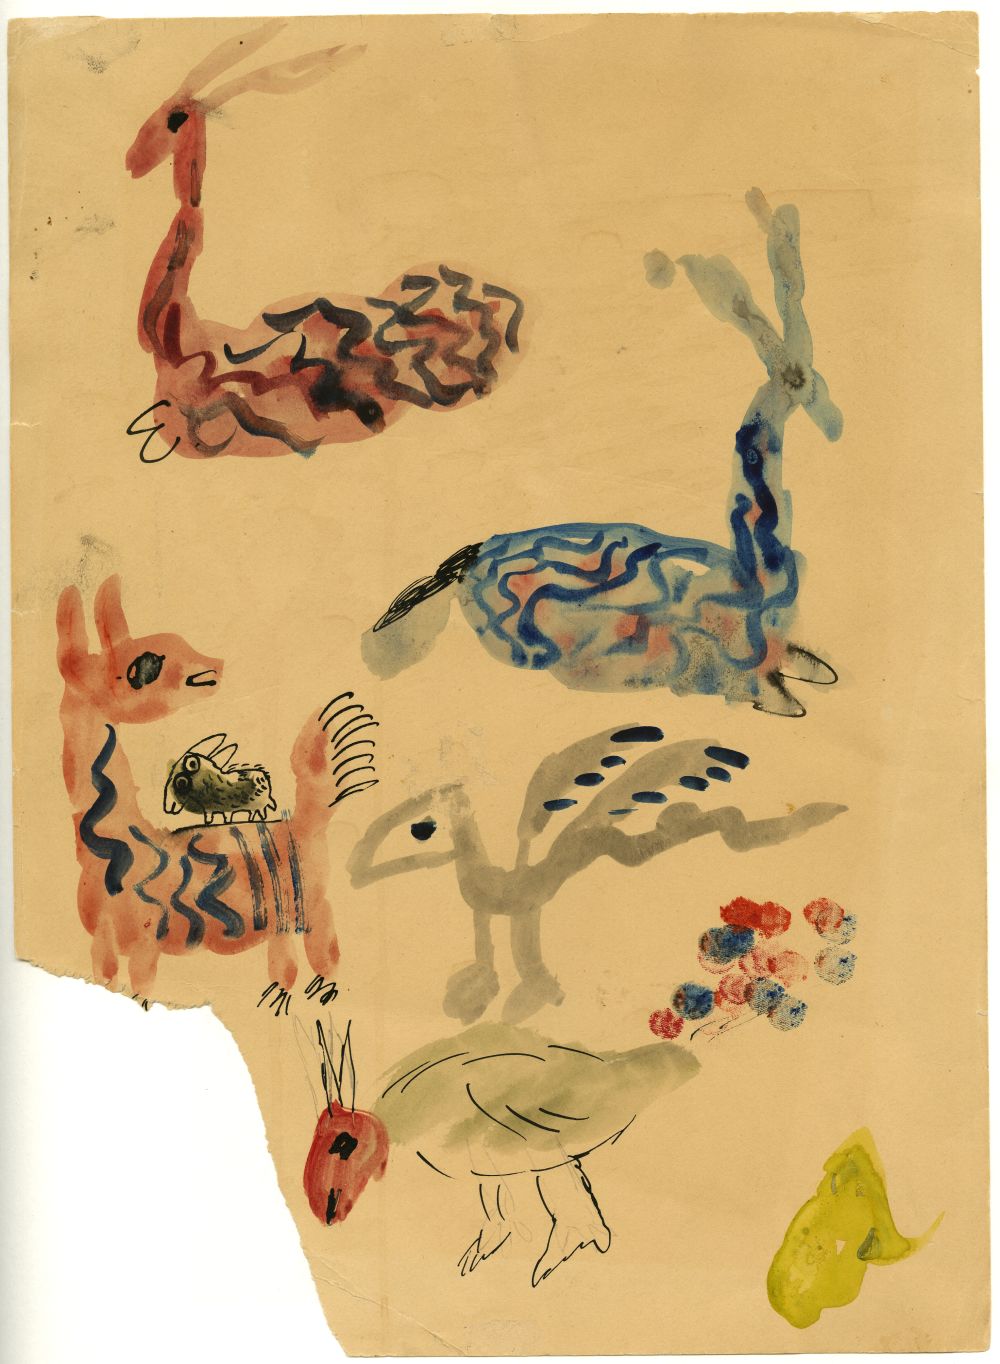 Ian Godfrey sketchbook, animal drawings. 